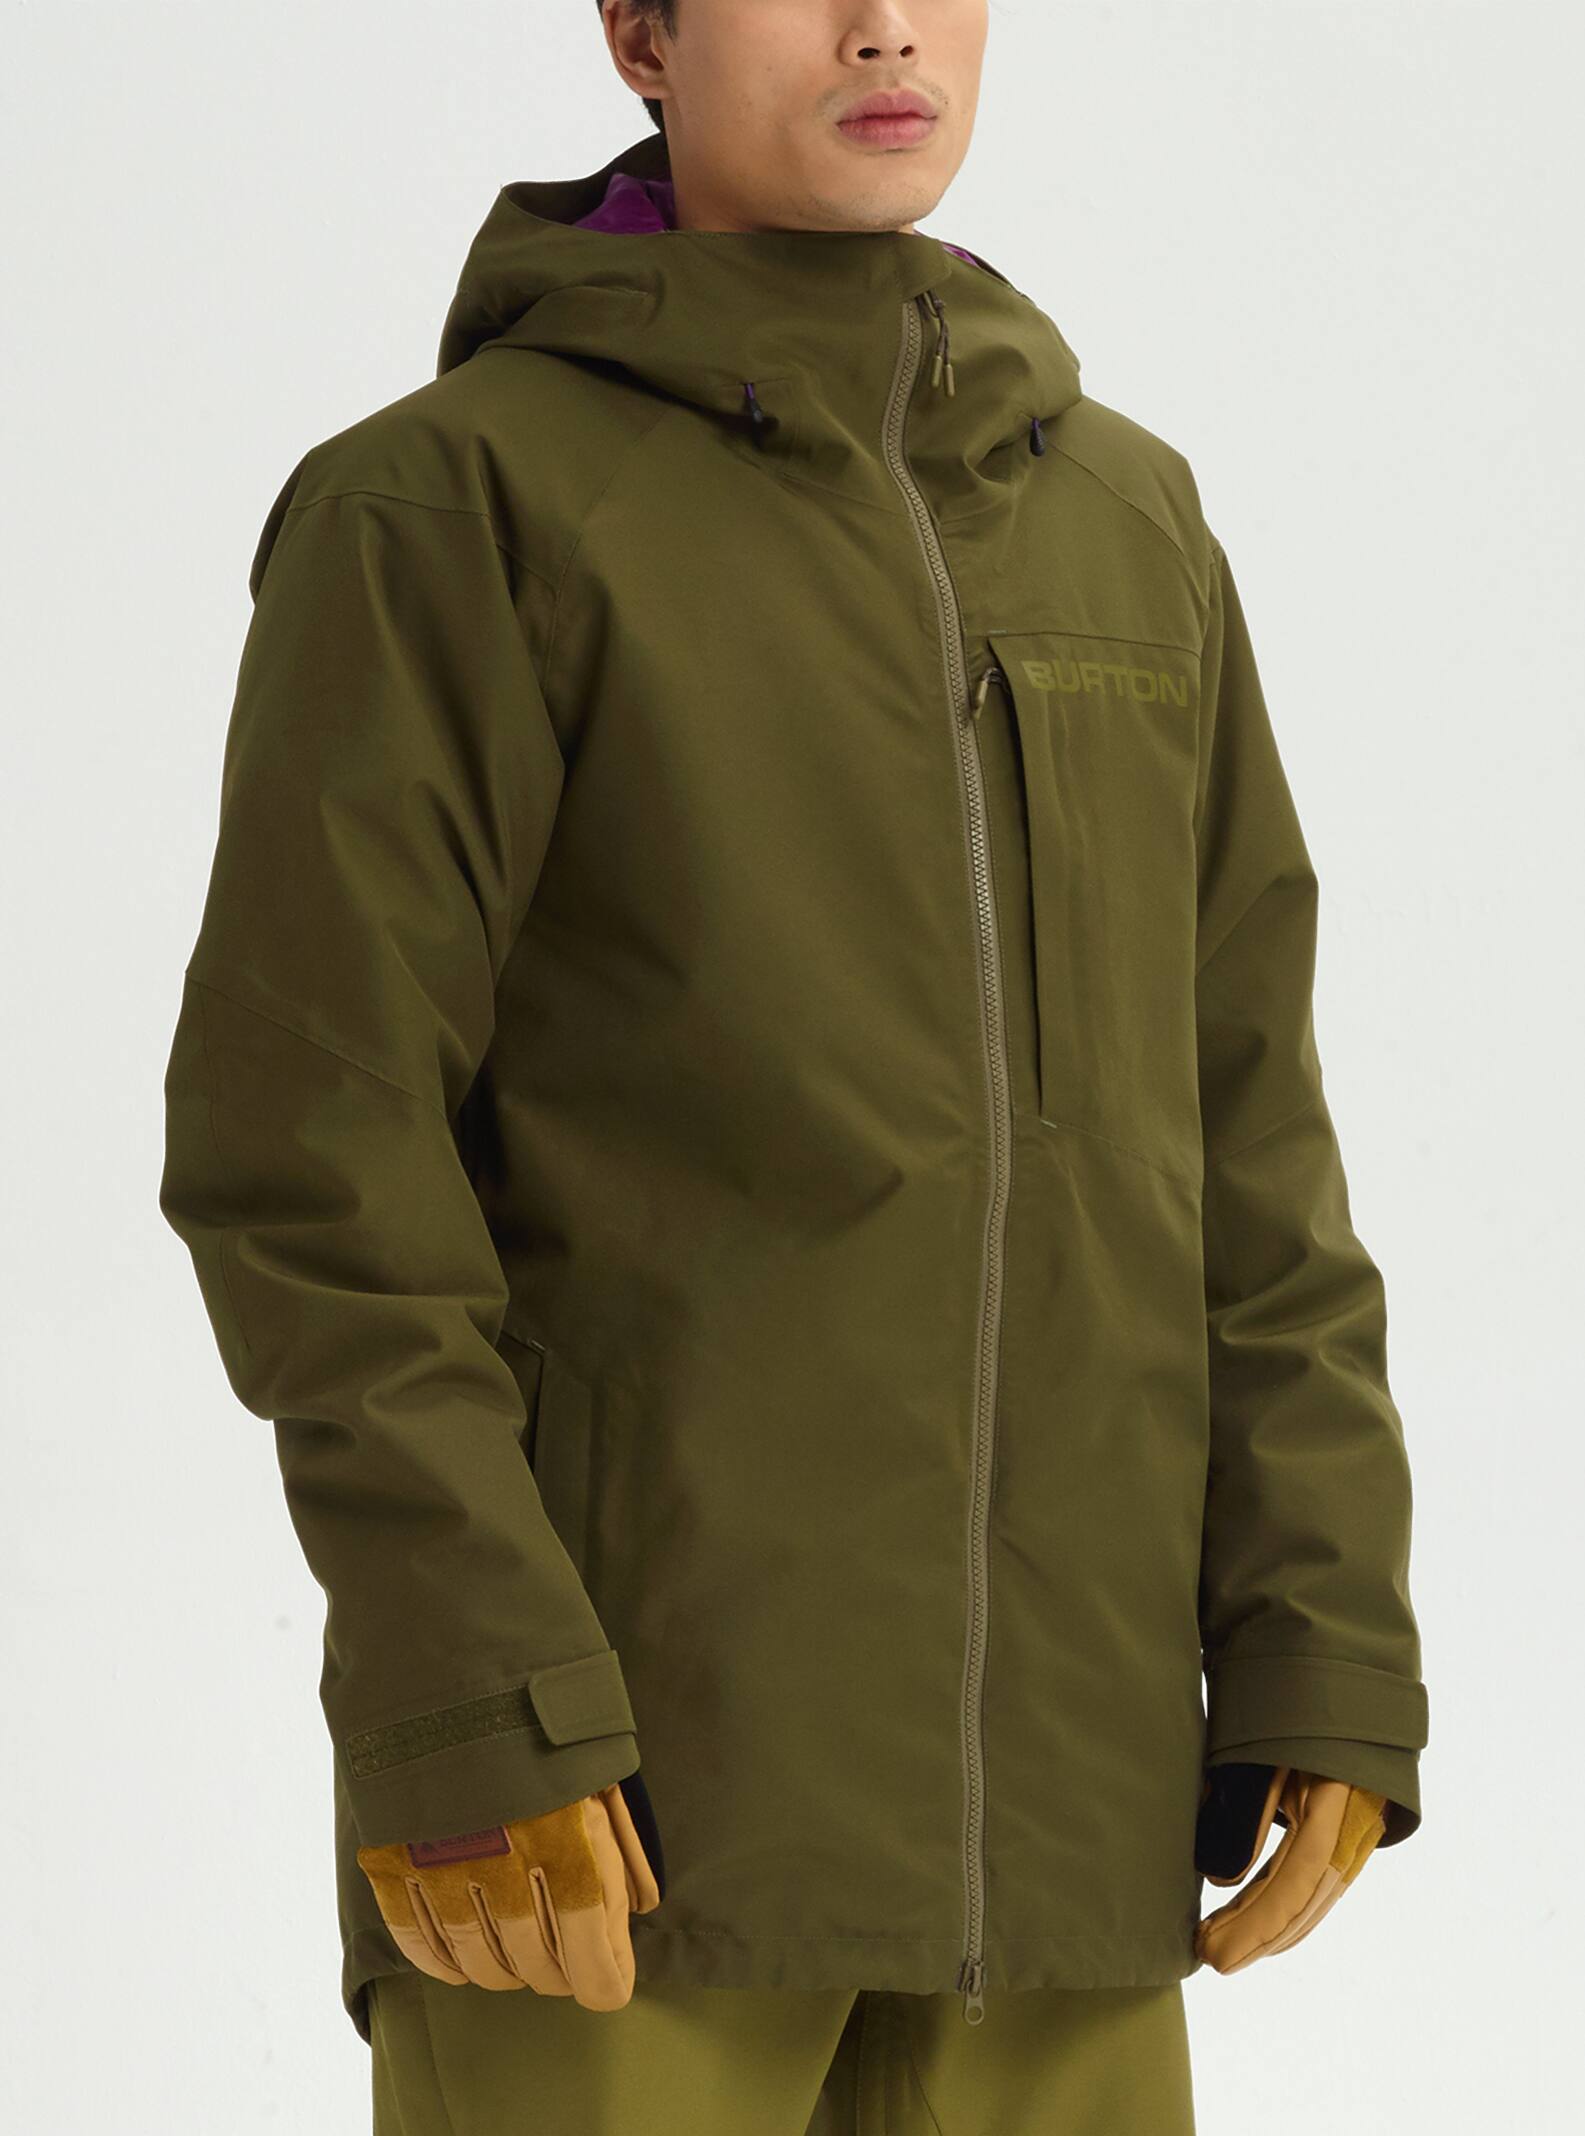 Men's GORE-TEX Radial Jacket Slim | Burton.com Winter 2020 US